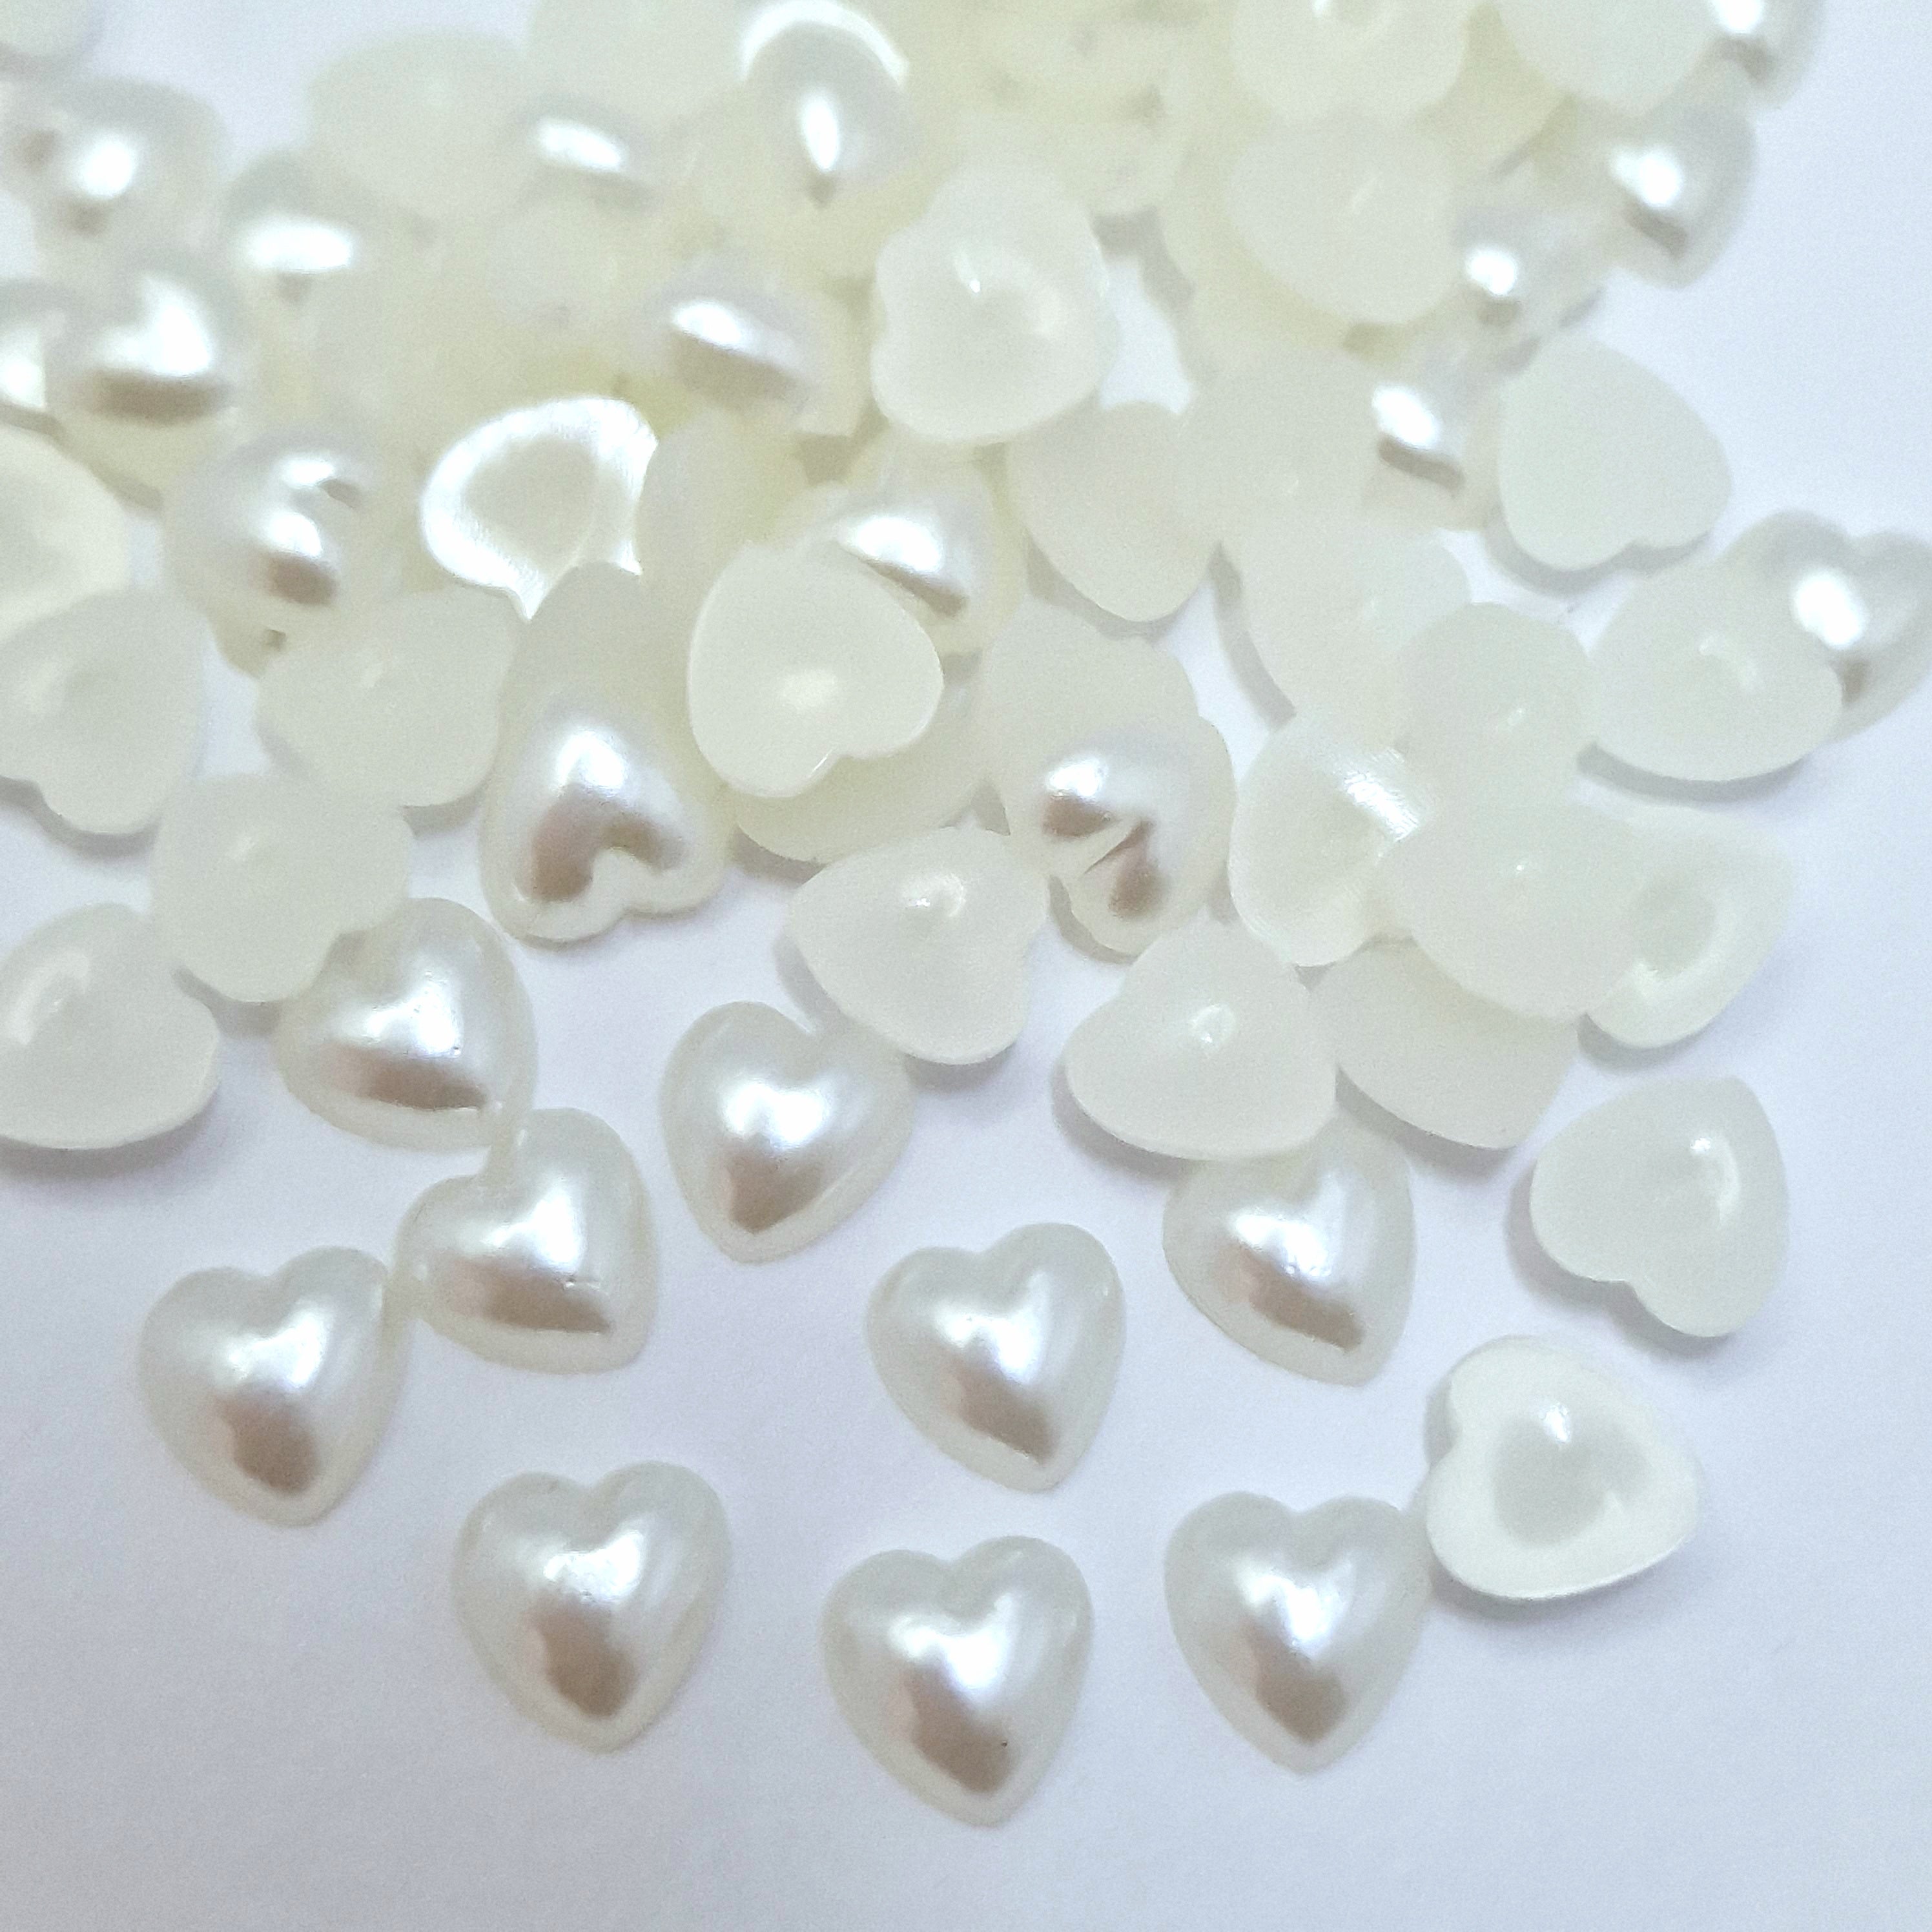 MajorCrafts 240pcs 8mm Cream Ivory Flat Back Heart Resin Embellishment Pearls